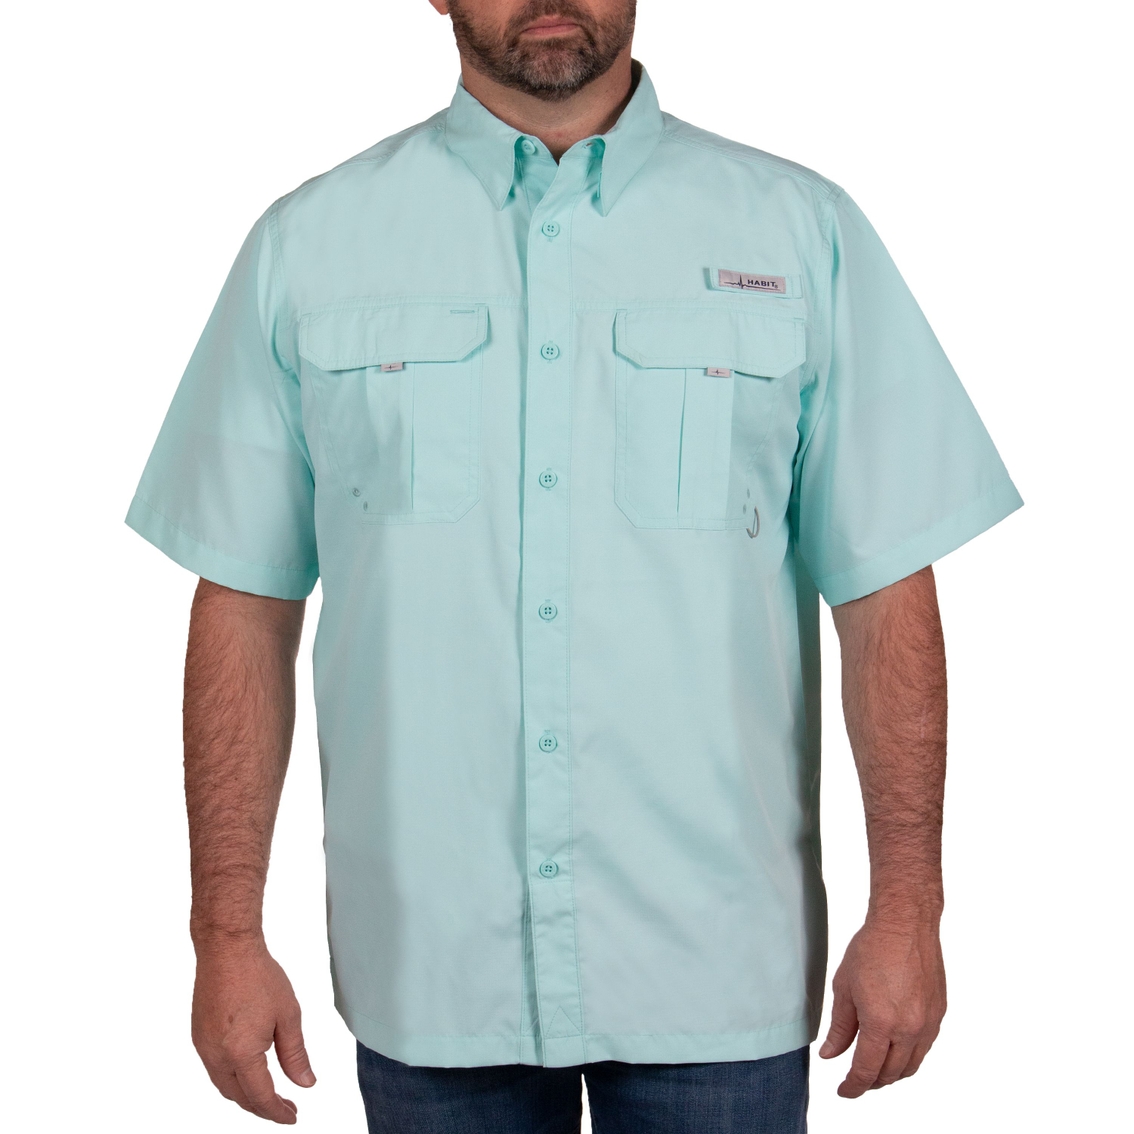 Habit Men's Fishing Shirts w/ UPF 40 Protection Just $11.98 on